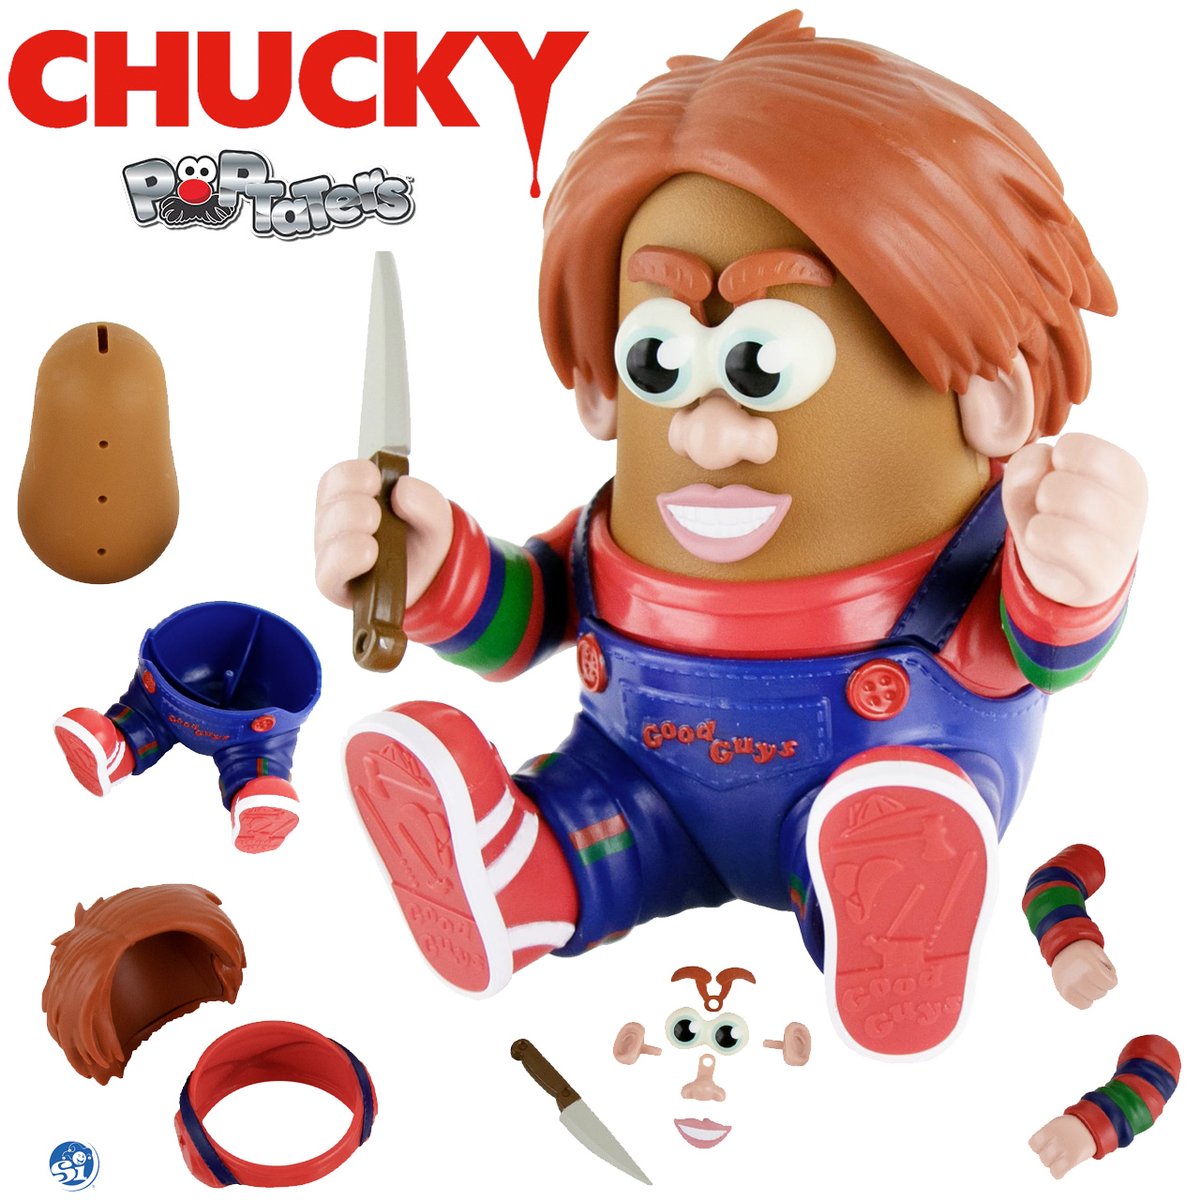 Boneco Chucky Cabeça de Batata PopTaters (Child’s Play) no BdB: bit.ly/3WDcpf5